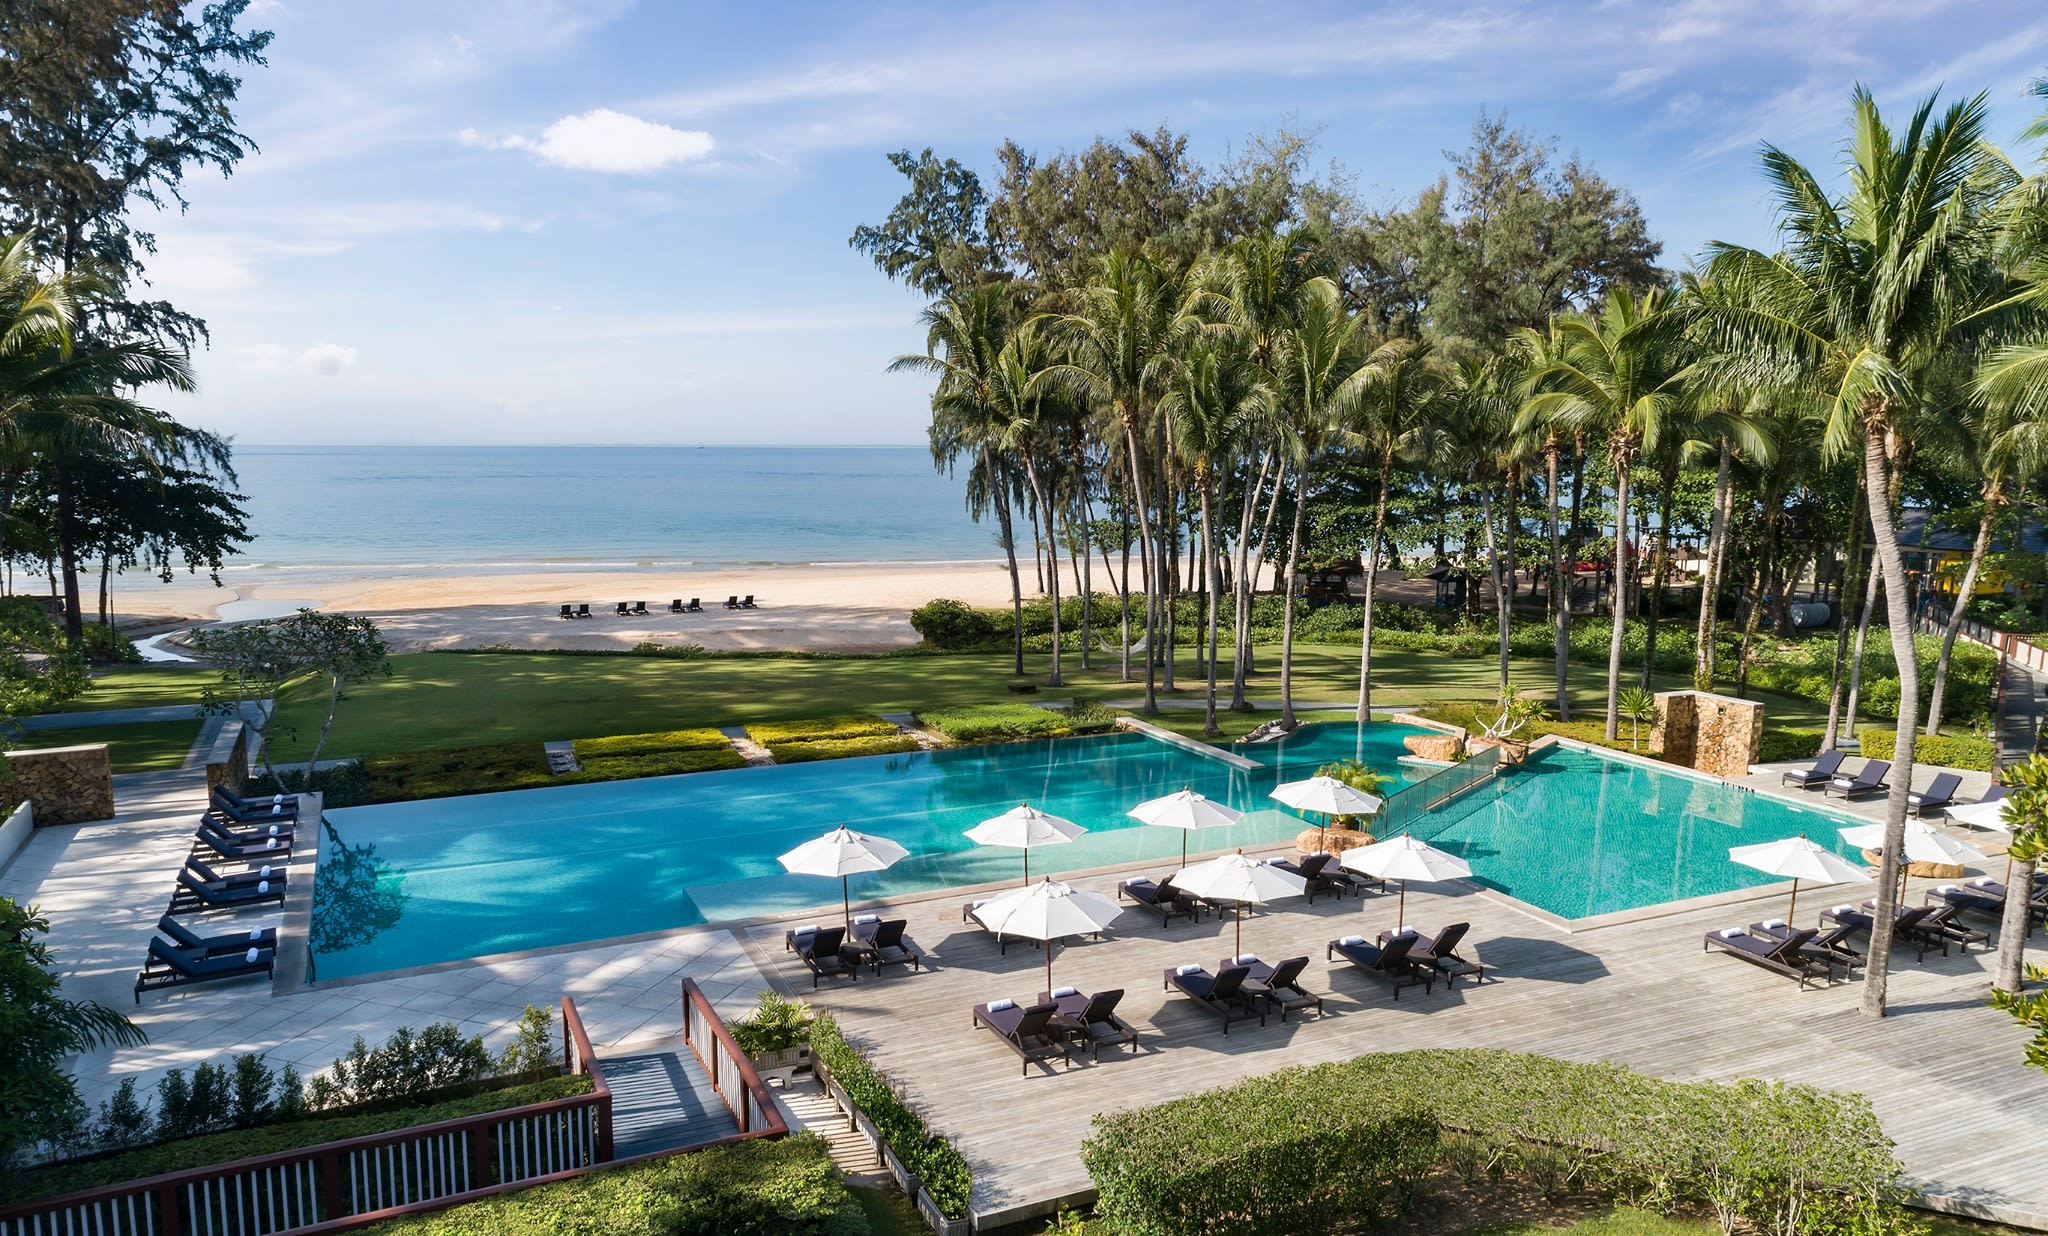 Dusit Thani Krabi Beach Resort (ดุสิตธานี กระบี่ บีช รีสอร์ท)